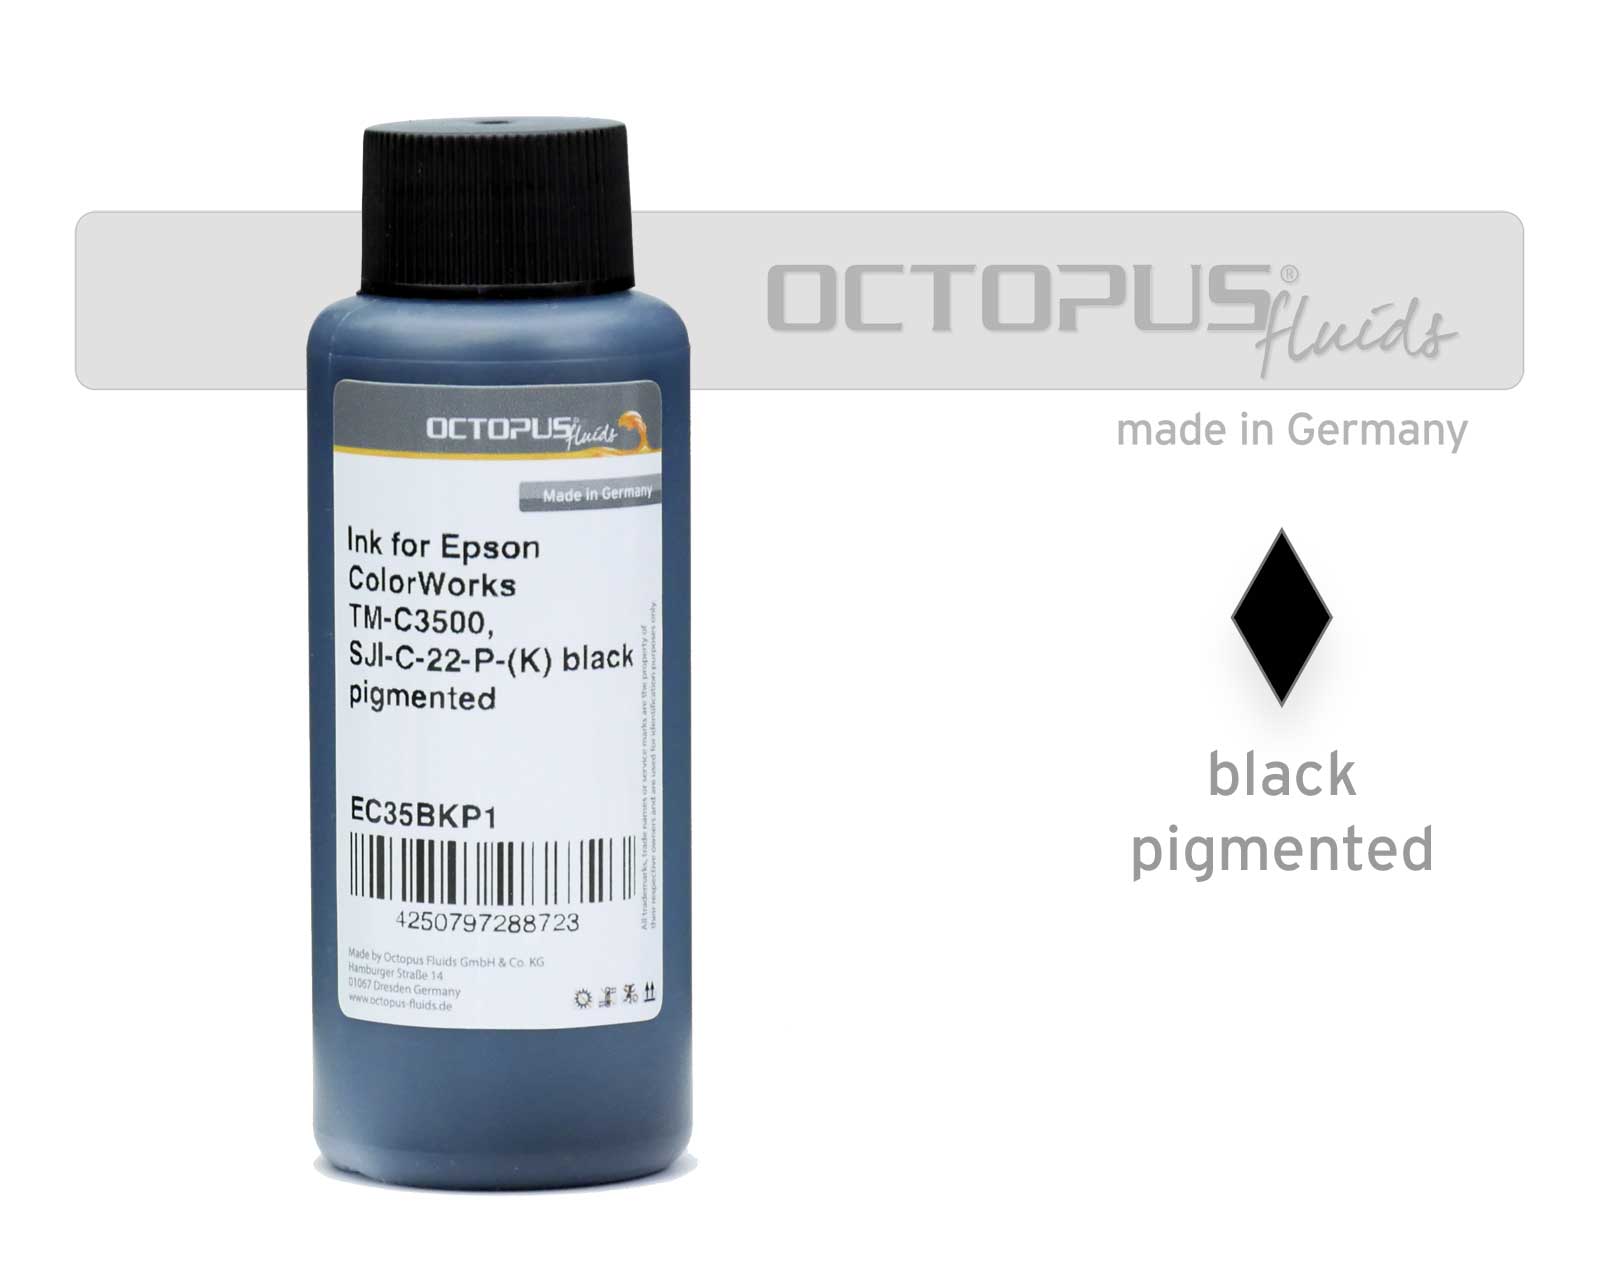 Refill ink for Epson ColorWorks TM-C3500, SJI-C-22-P-(K) black